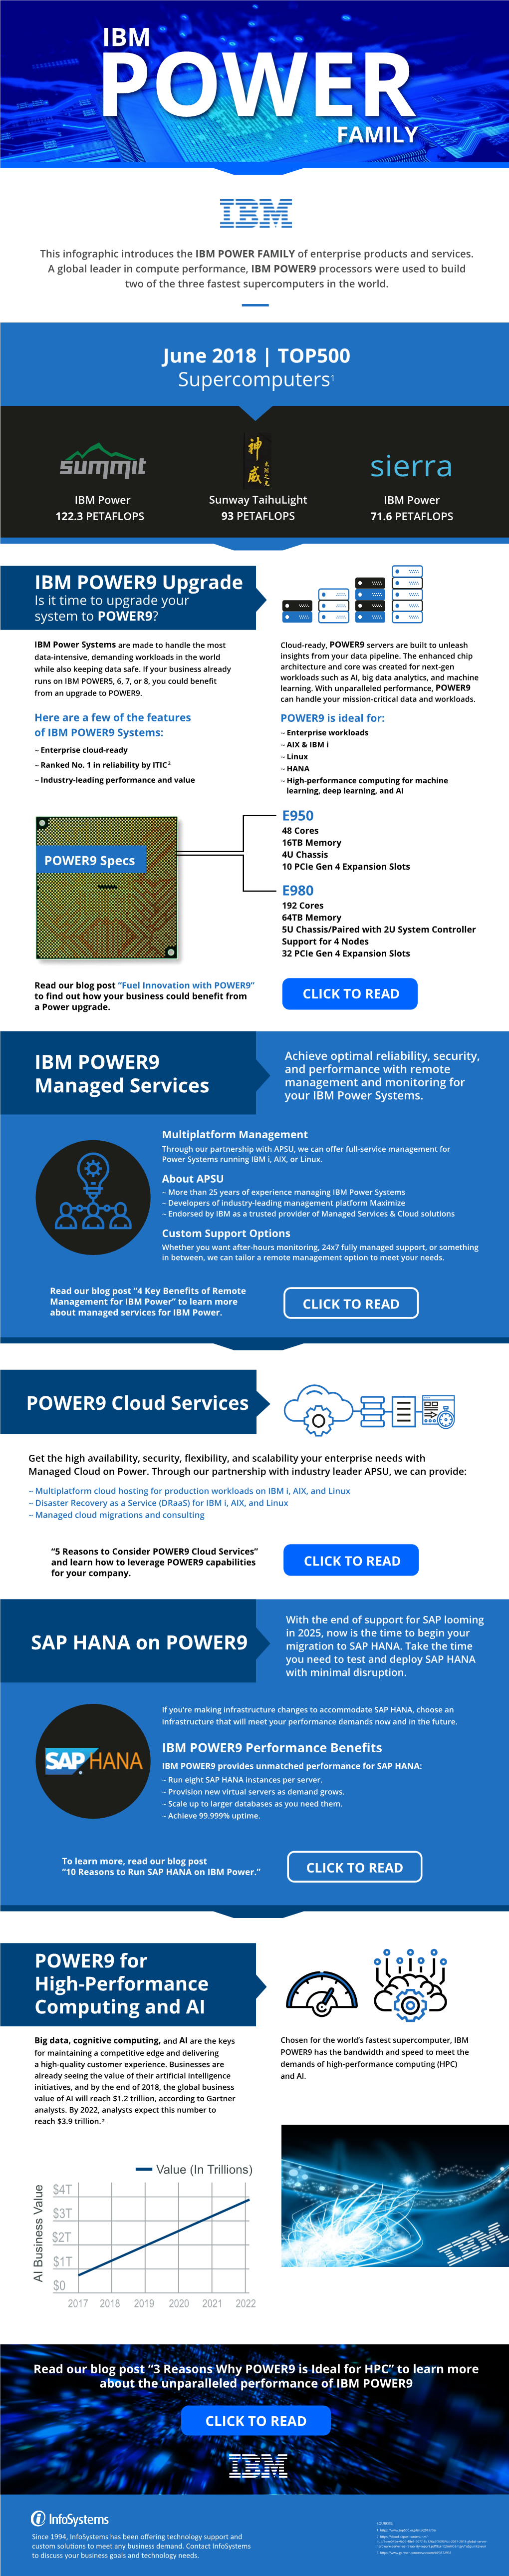 IBM Power9 Infographic